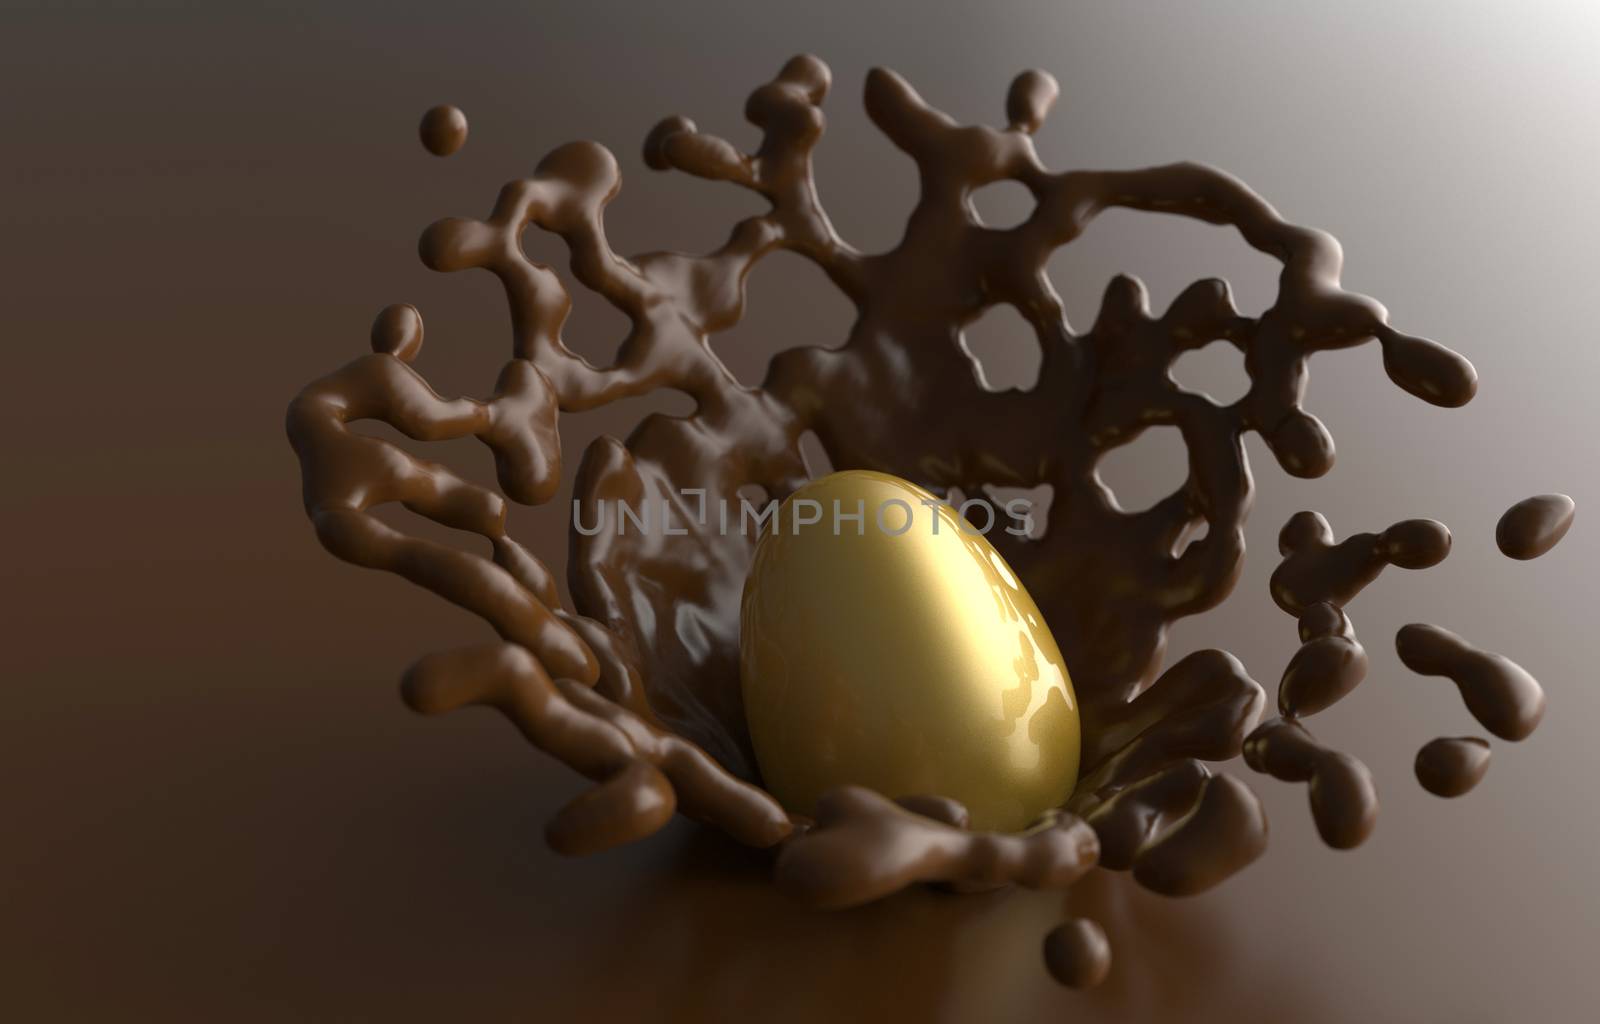 Easter golden egg splashes into hot chocolate.